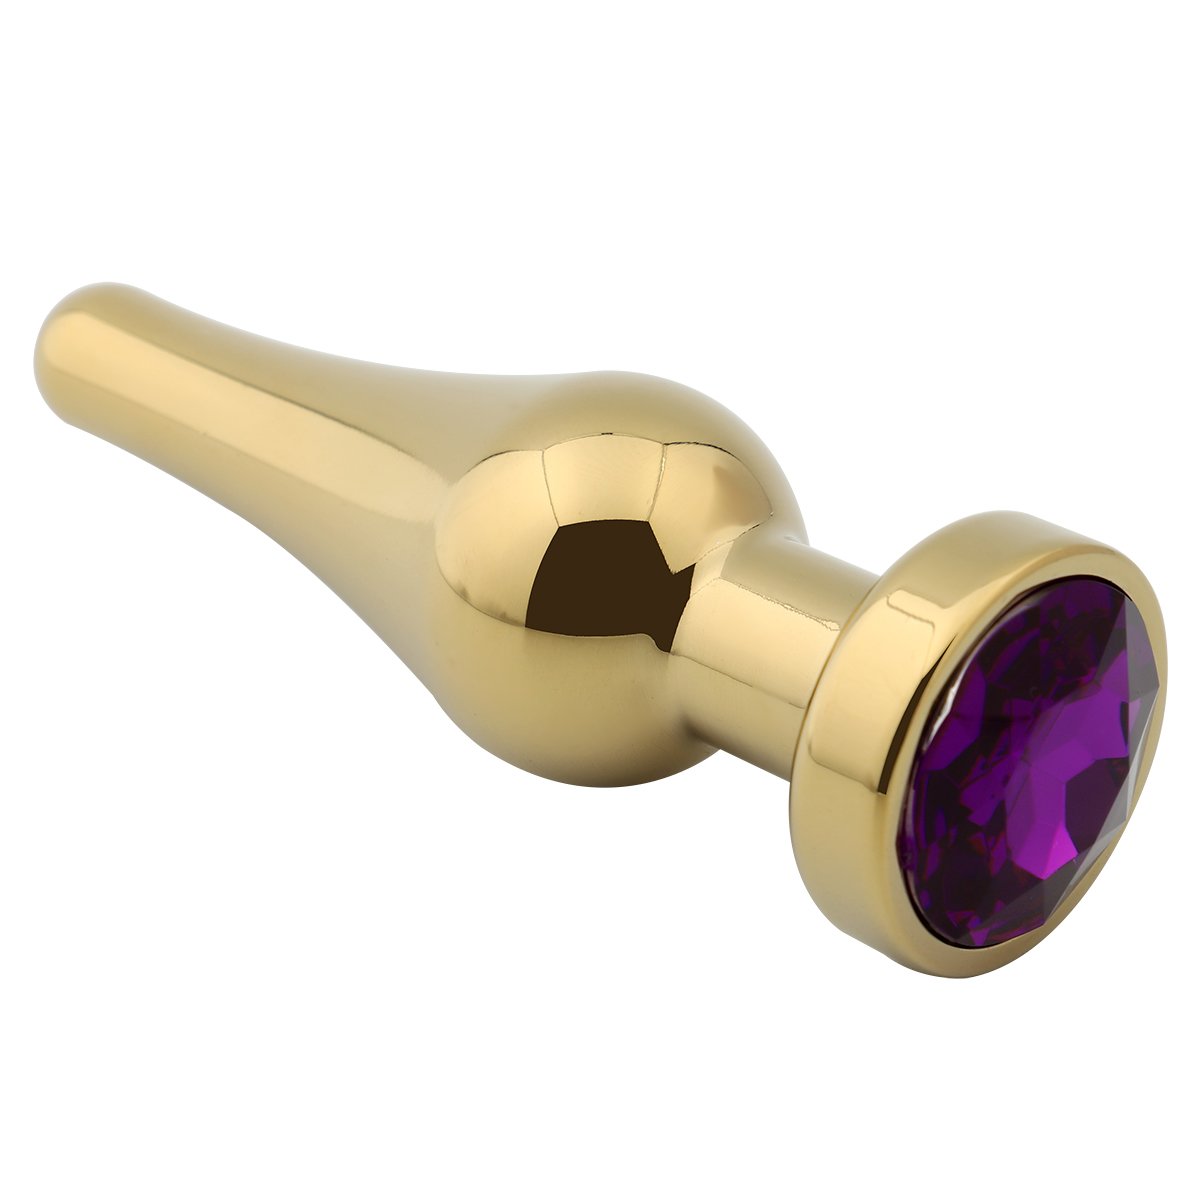 Foto van Banoch - Buttplug Lacrima Gold Purple Medium - Metalen buttplug - Diamant steen - Paars